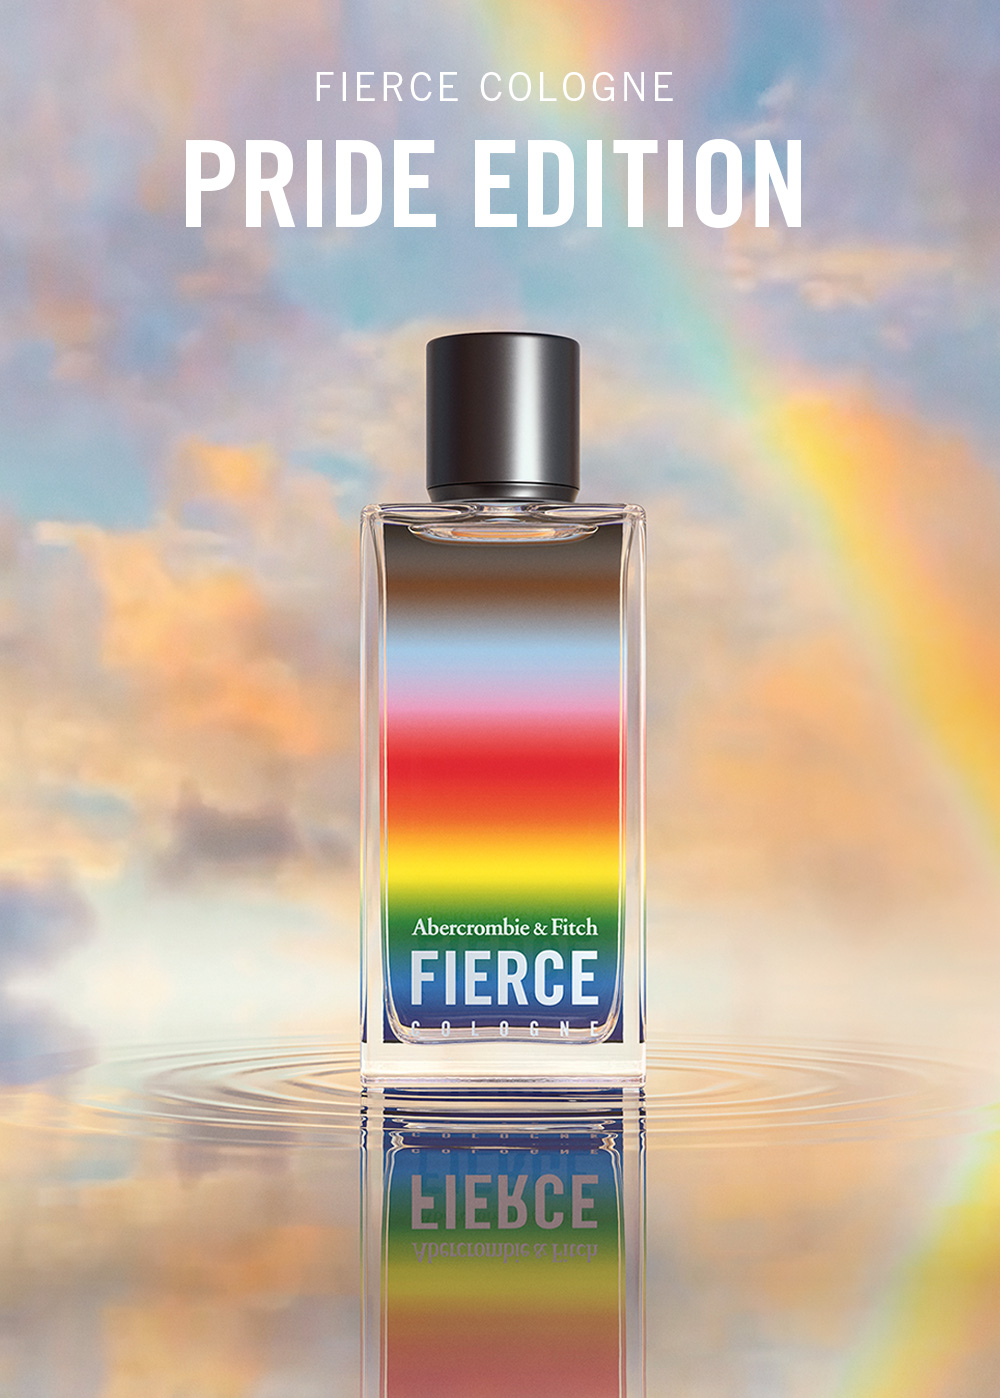 Fierce Pride Edition